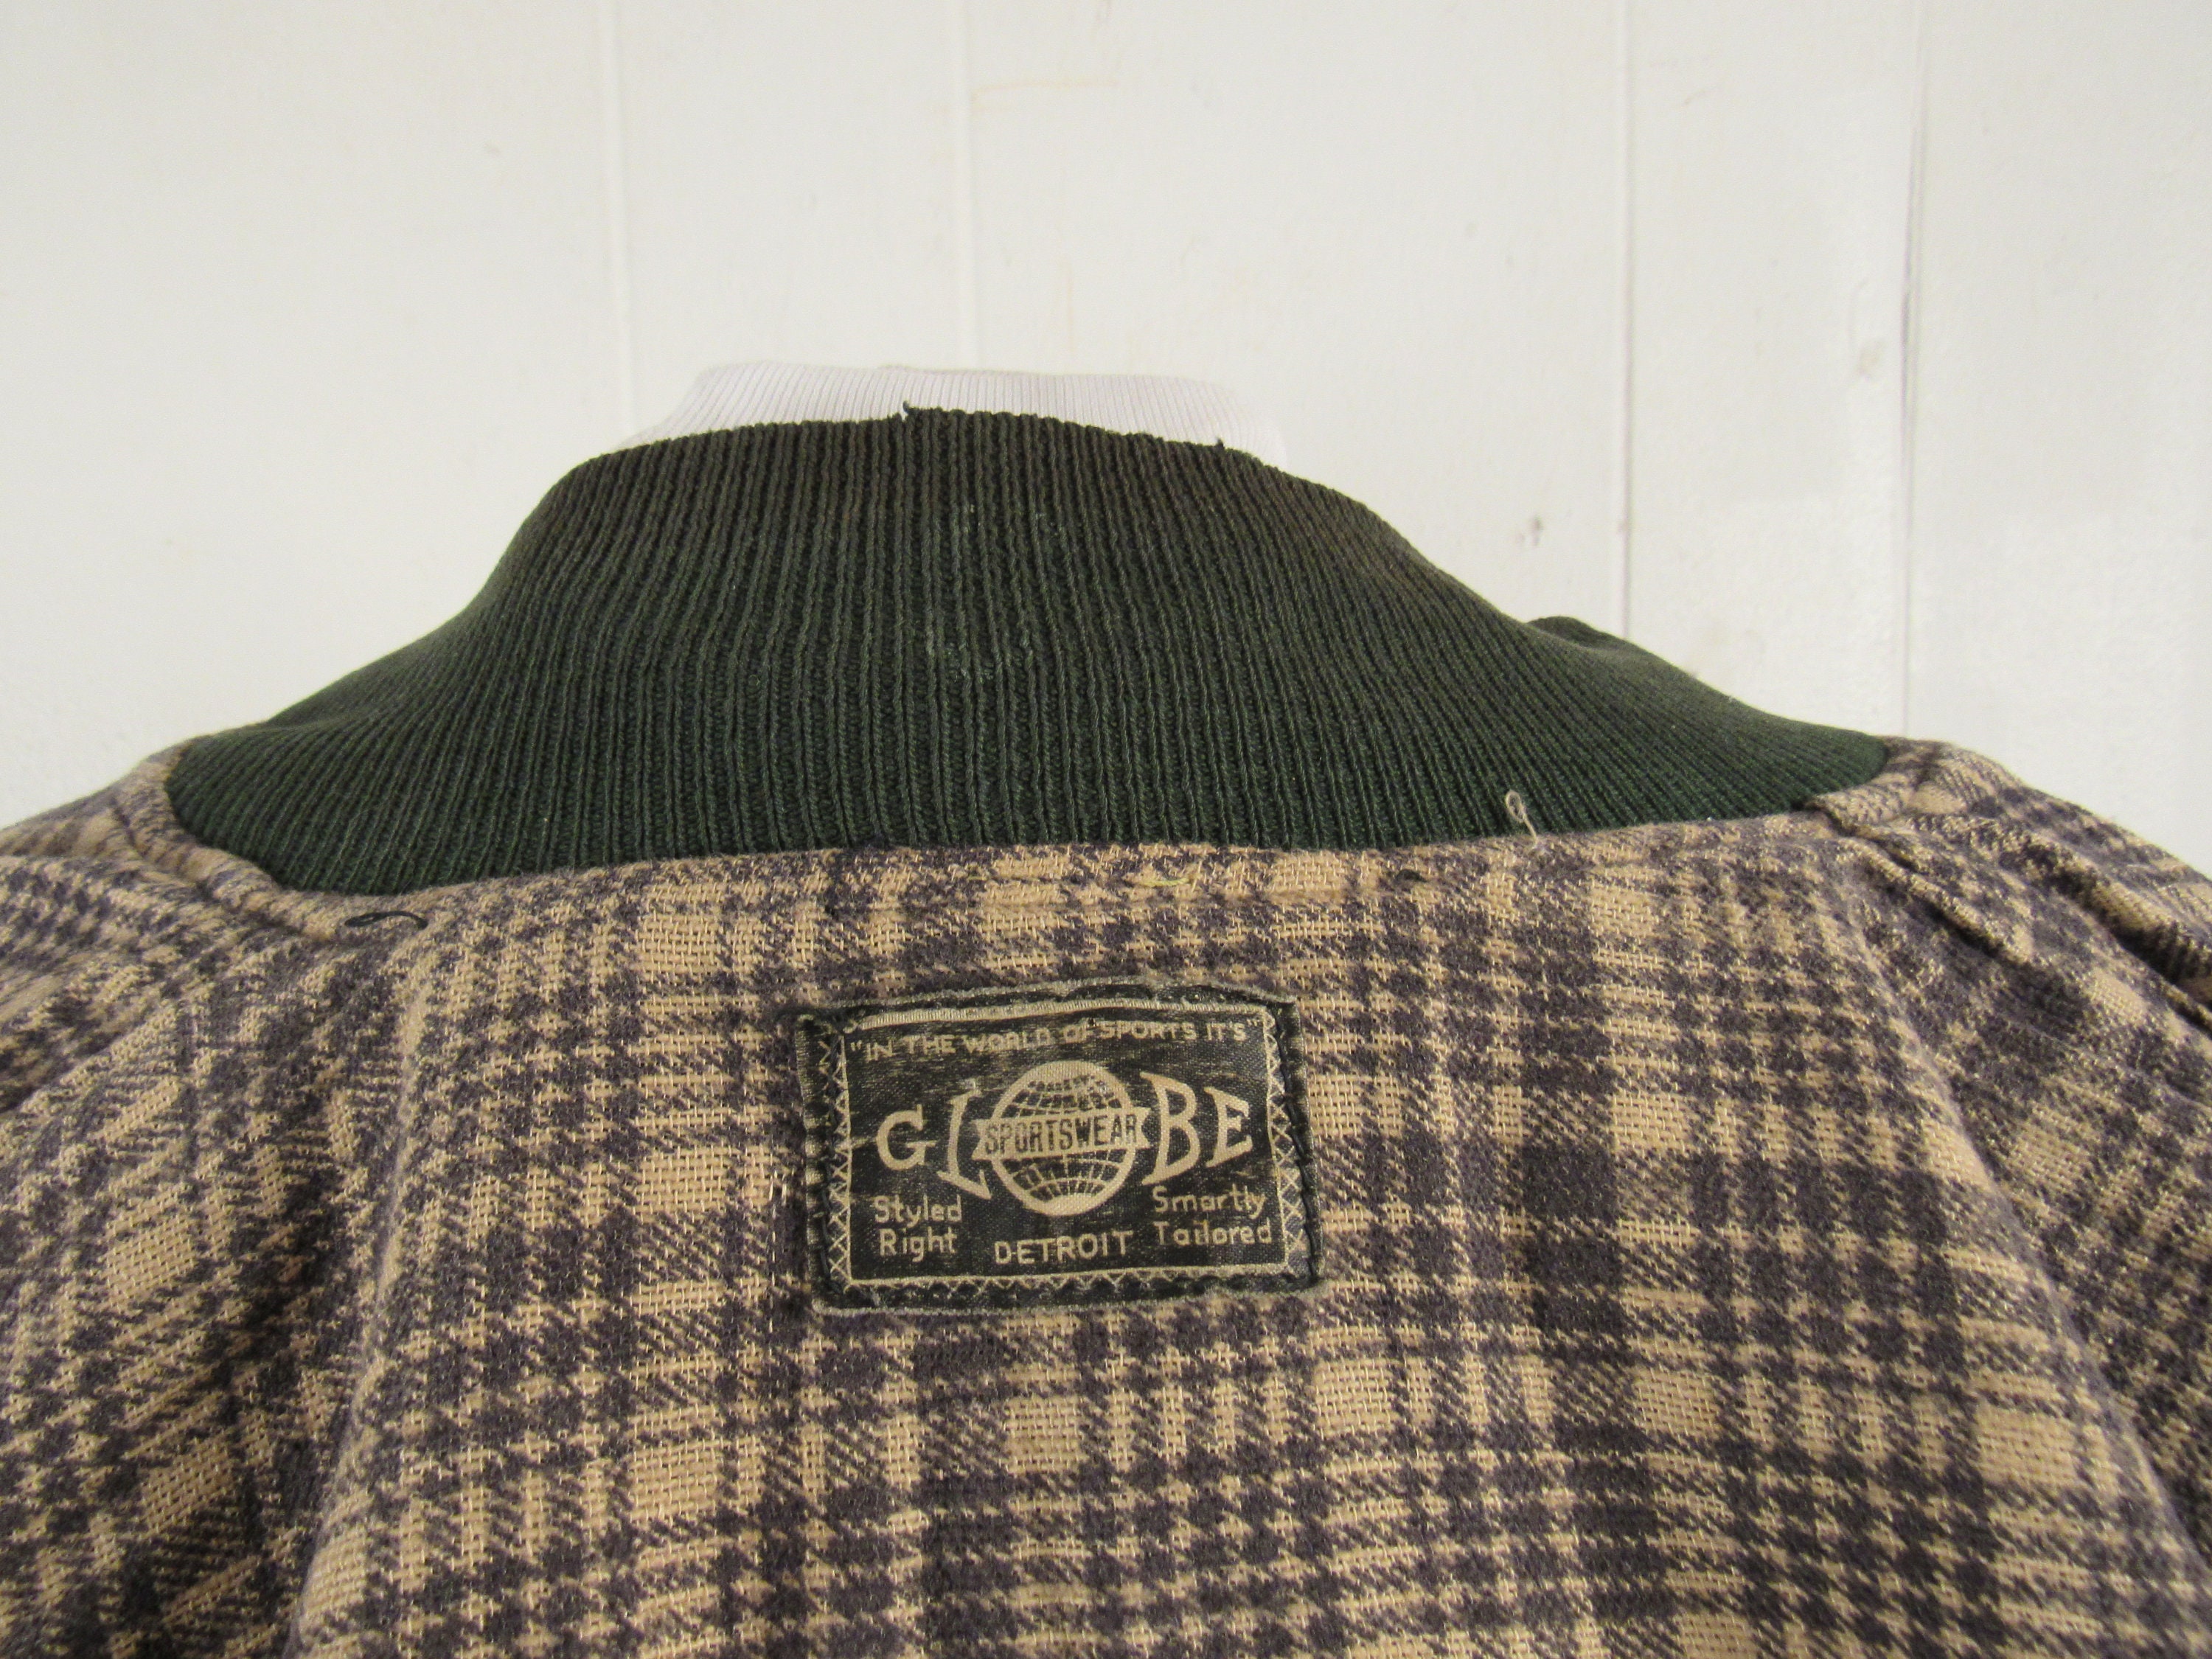 Vintage Jacket 1940s Jacket Cotton Flannel Jacket Stadium - Etsy